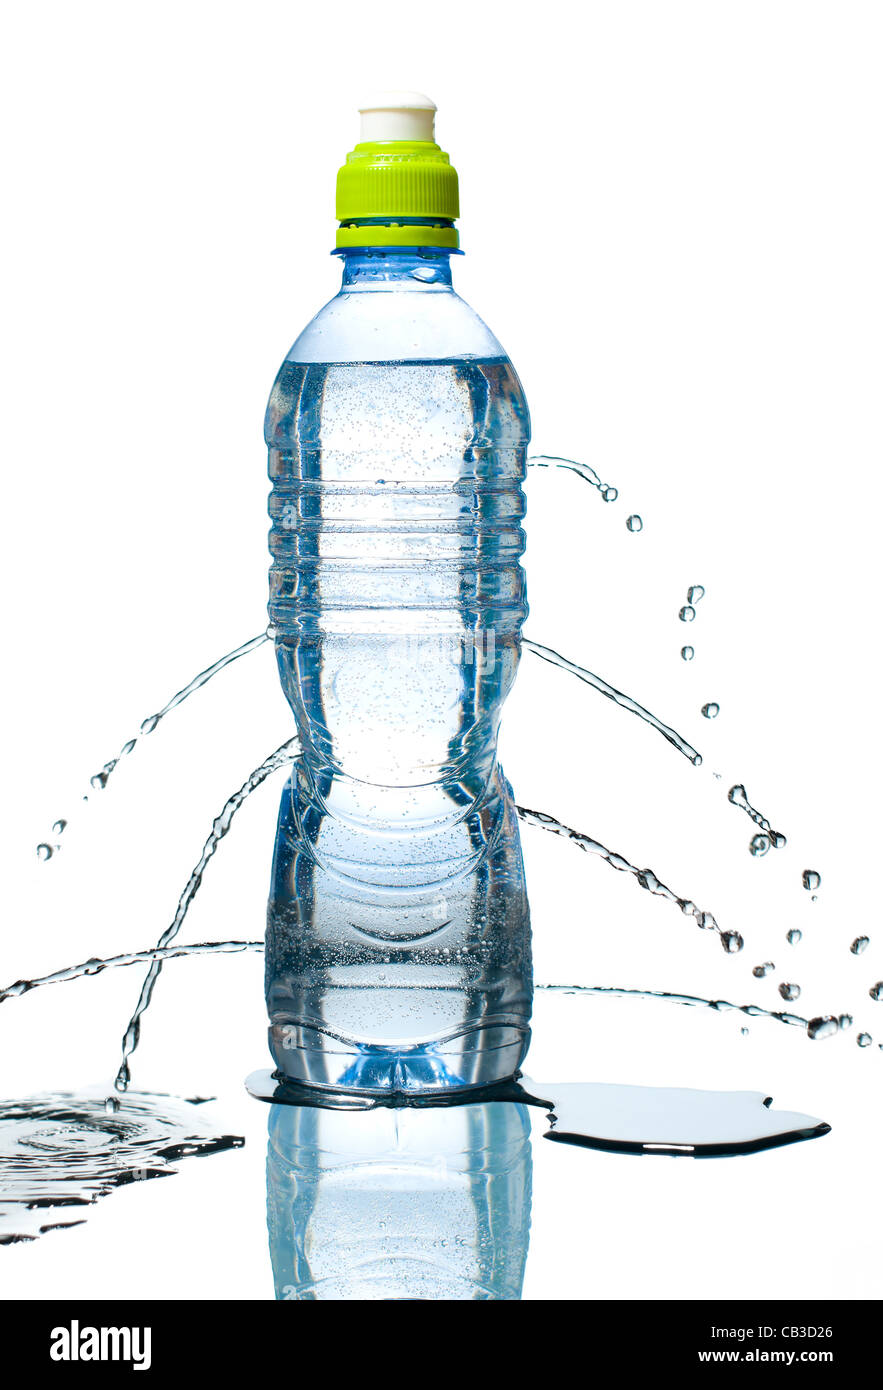 https://c8.alamy.com/comp/CB3D26/blue-bottle-of-water-leaking-small-bubbles-inside-reflection-below-CB3D26.jpg